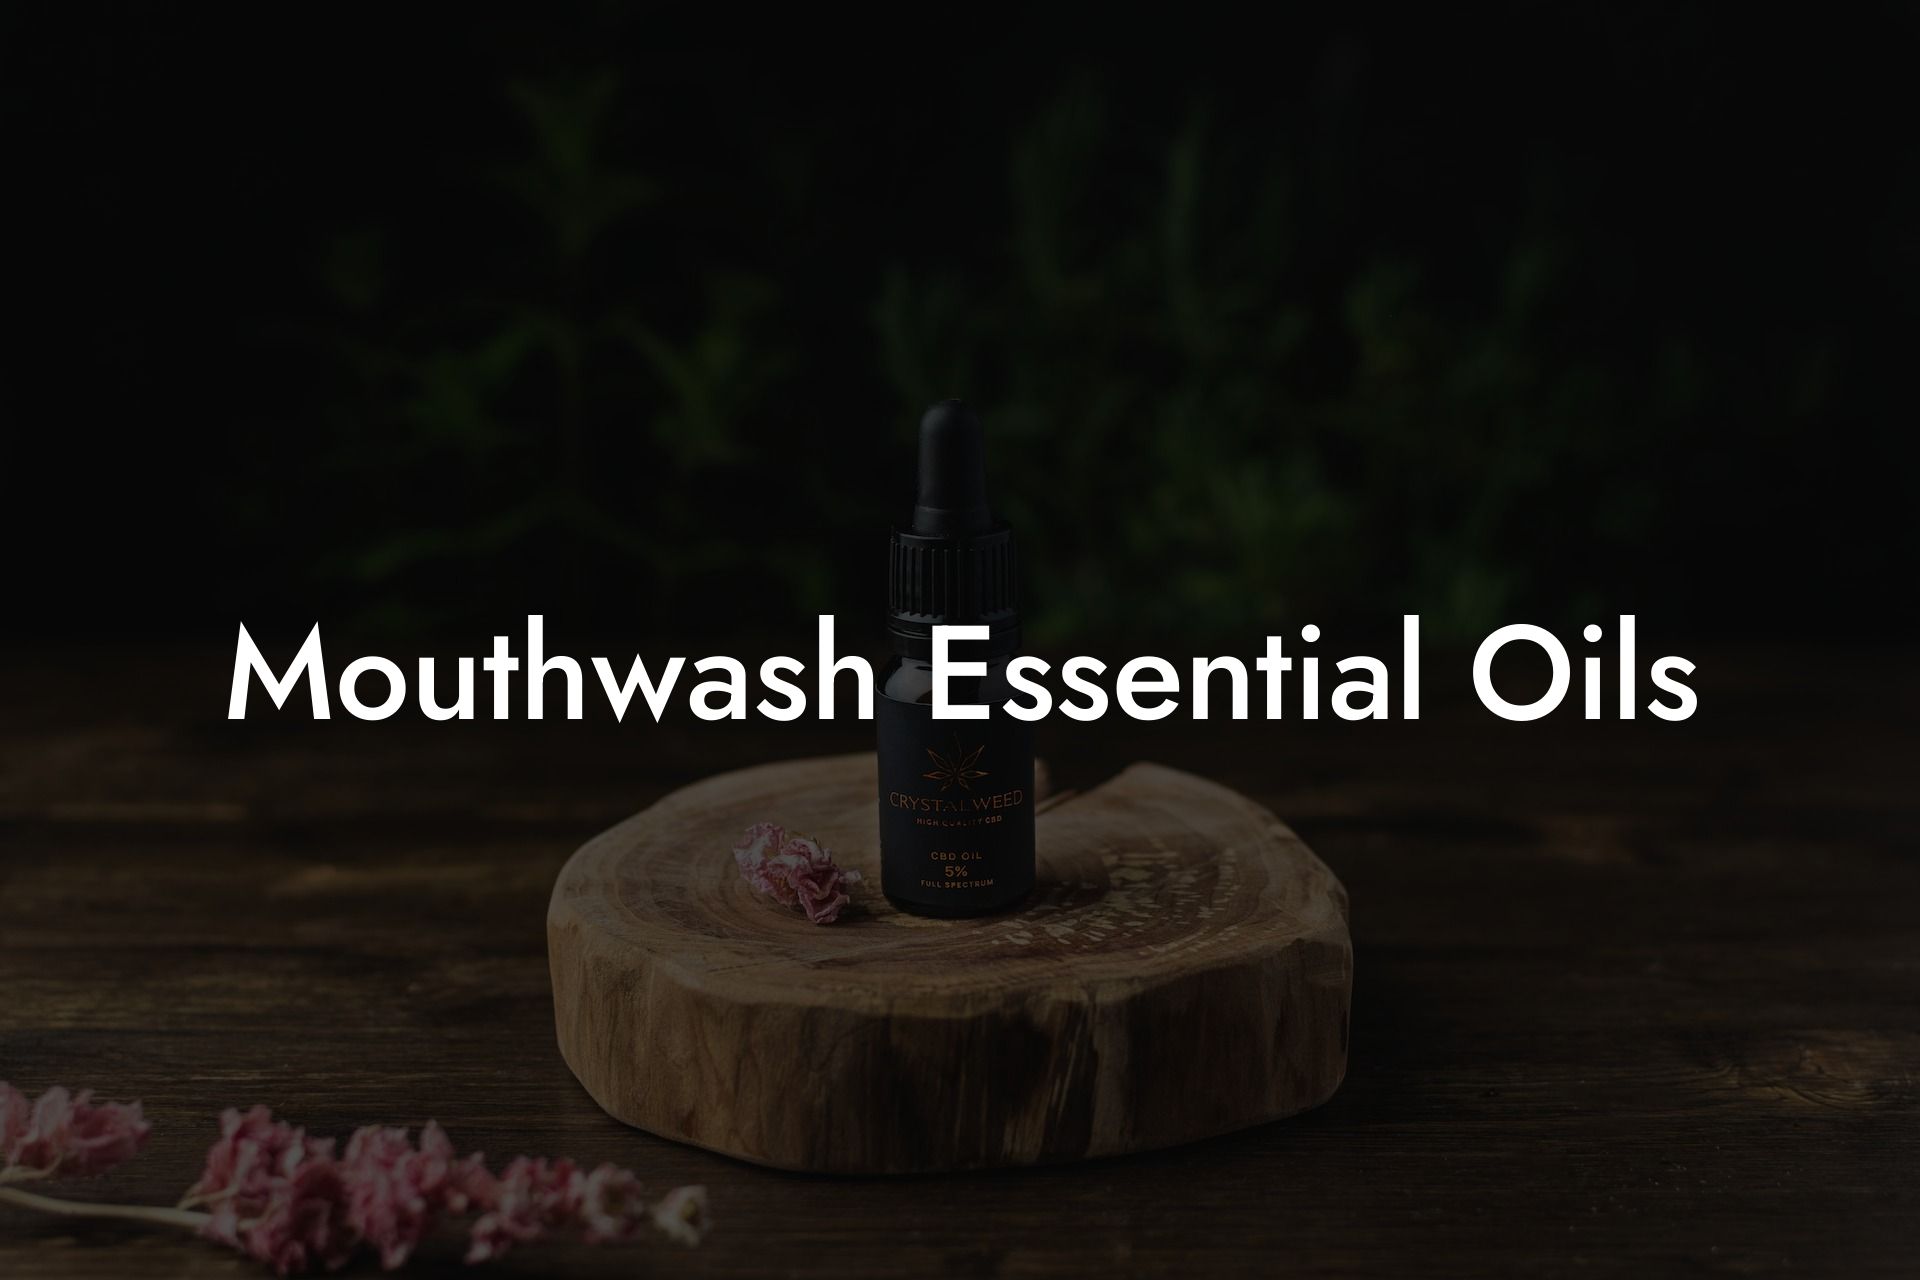 Mouthwash Essential Oils